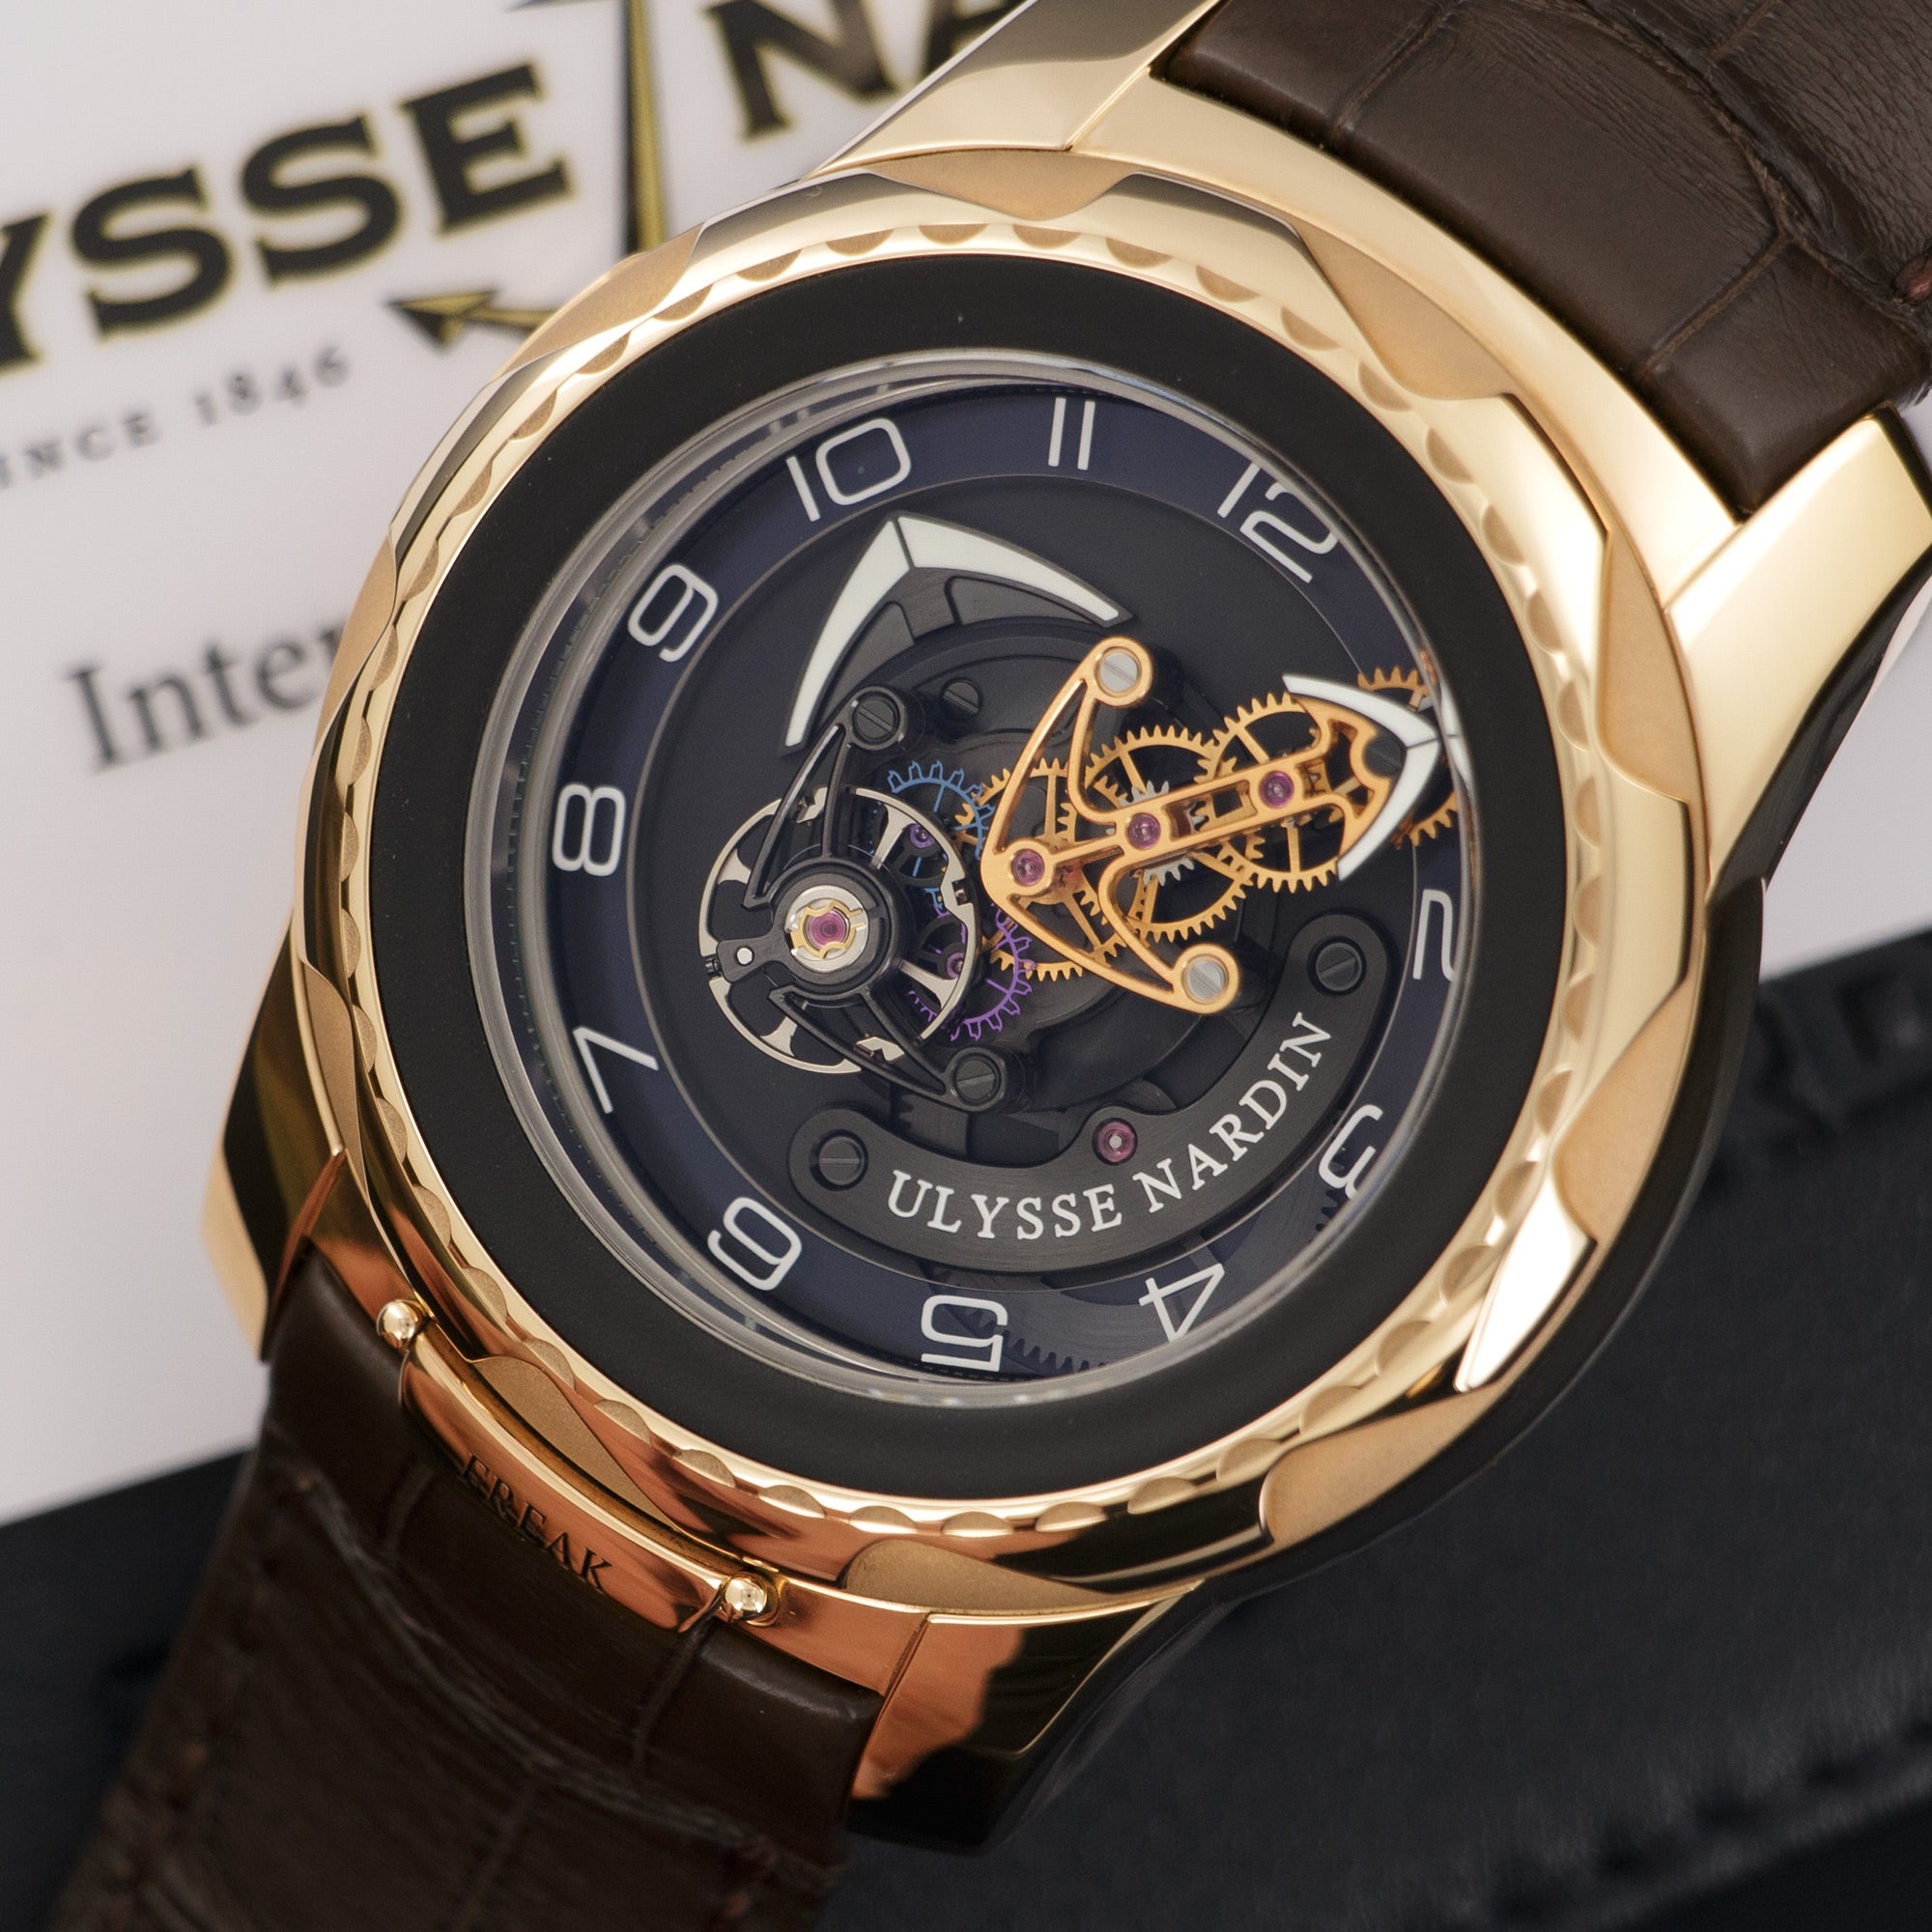 Ulysse Nardin - Ulysse Nardin Rose Gold Freak Cruiser Watch - The Keystone Watches